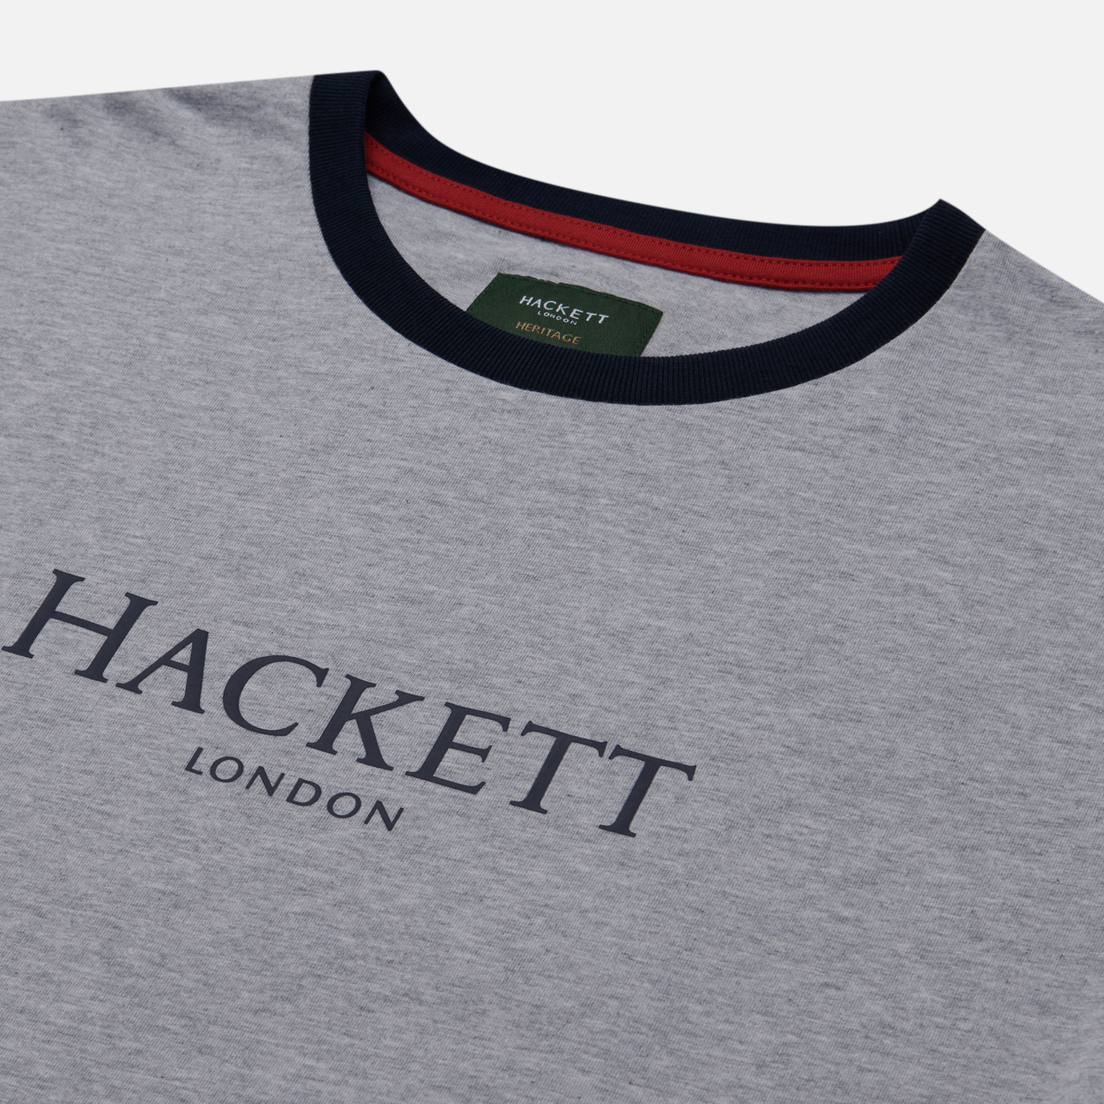 Hackett Мужская футболка Heritage Classic